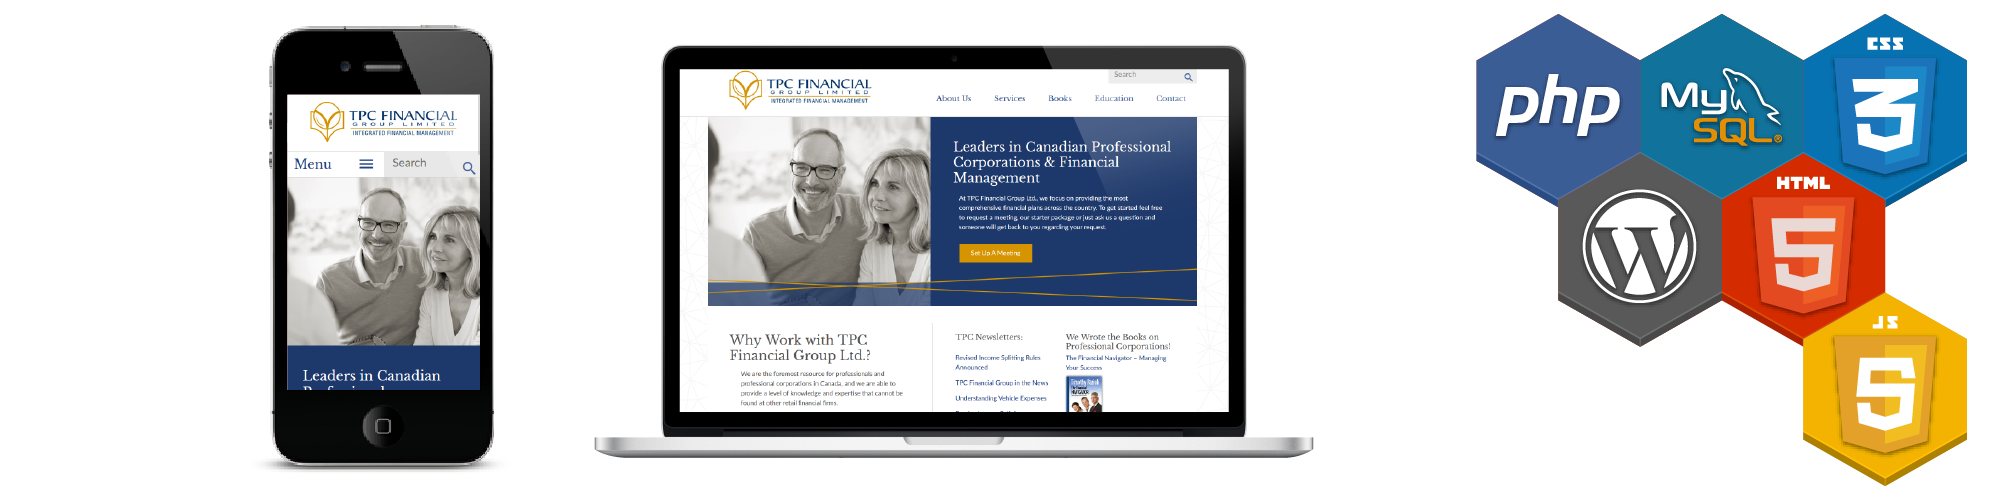 TPC Financial Website